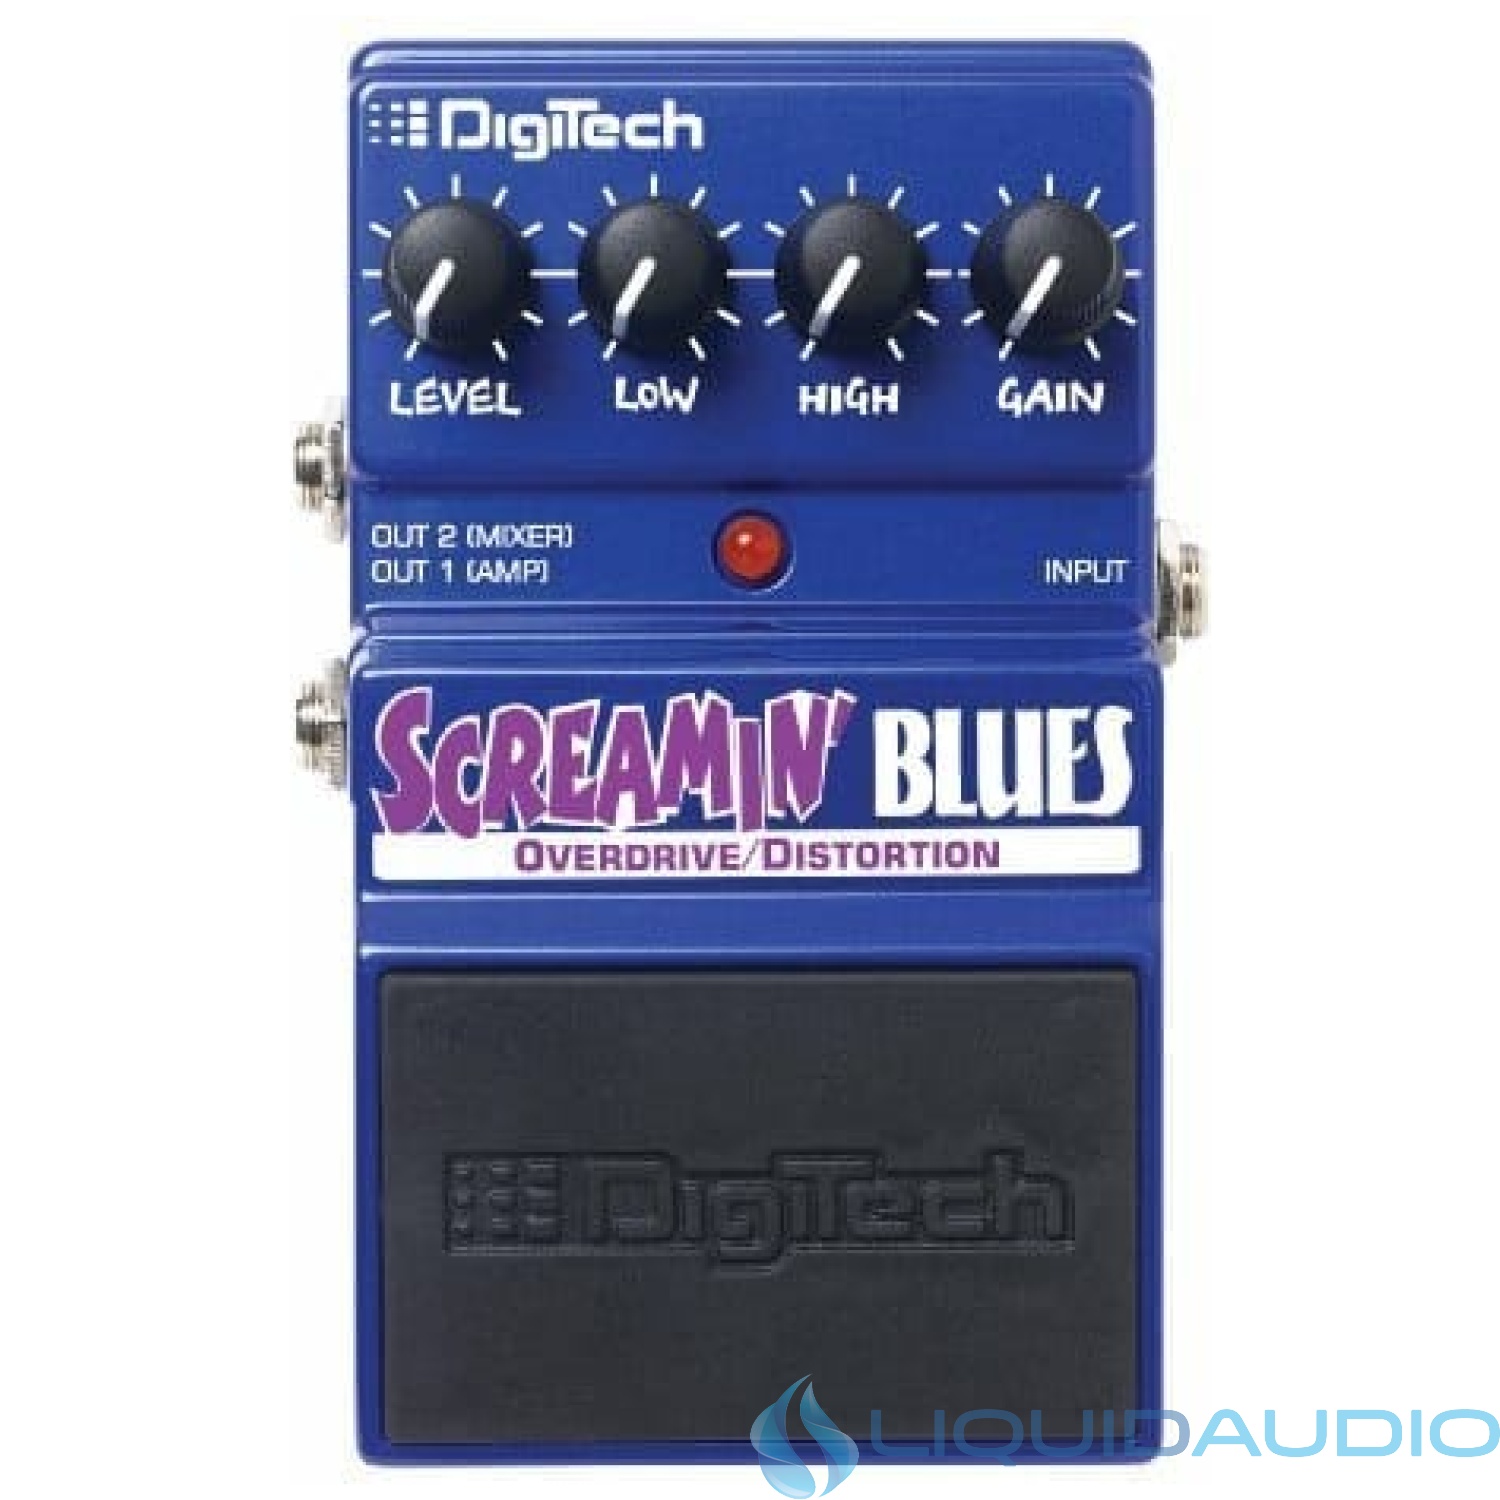 DigiTech DSB Screamin' Blues Overdrive Analog Distortion Pedal